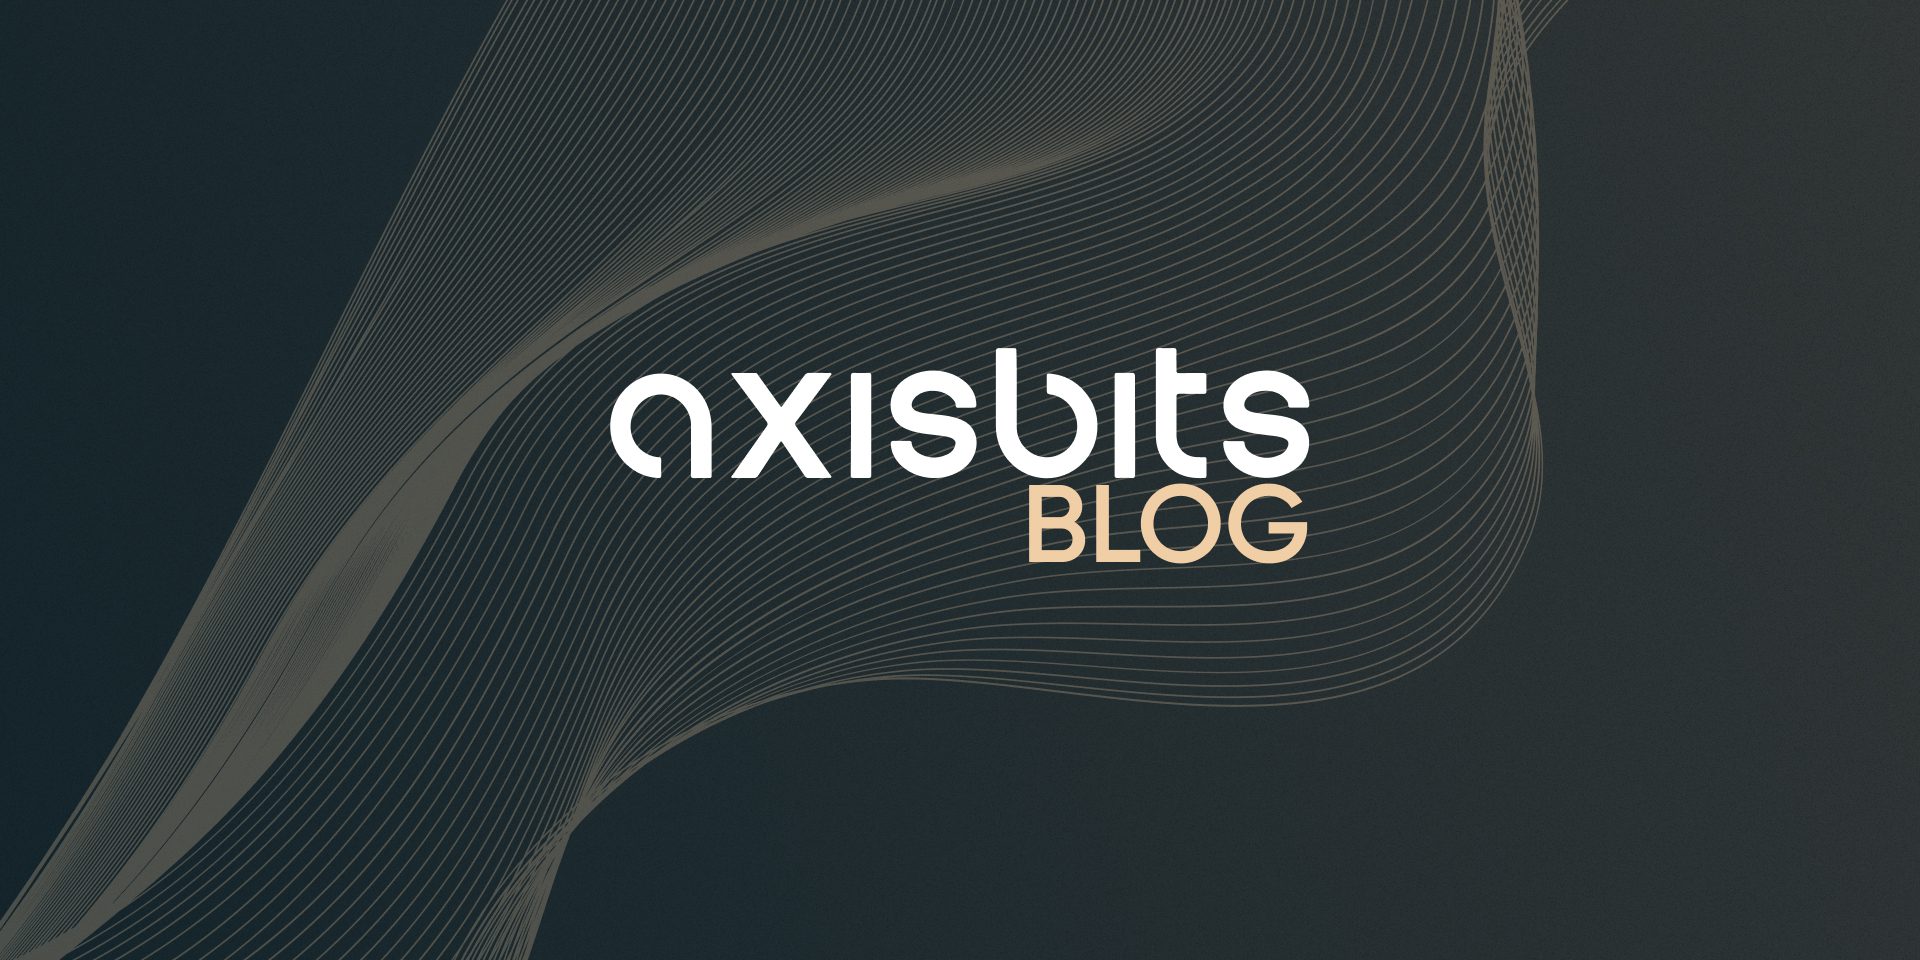 Axisbits blog logo on a black background.